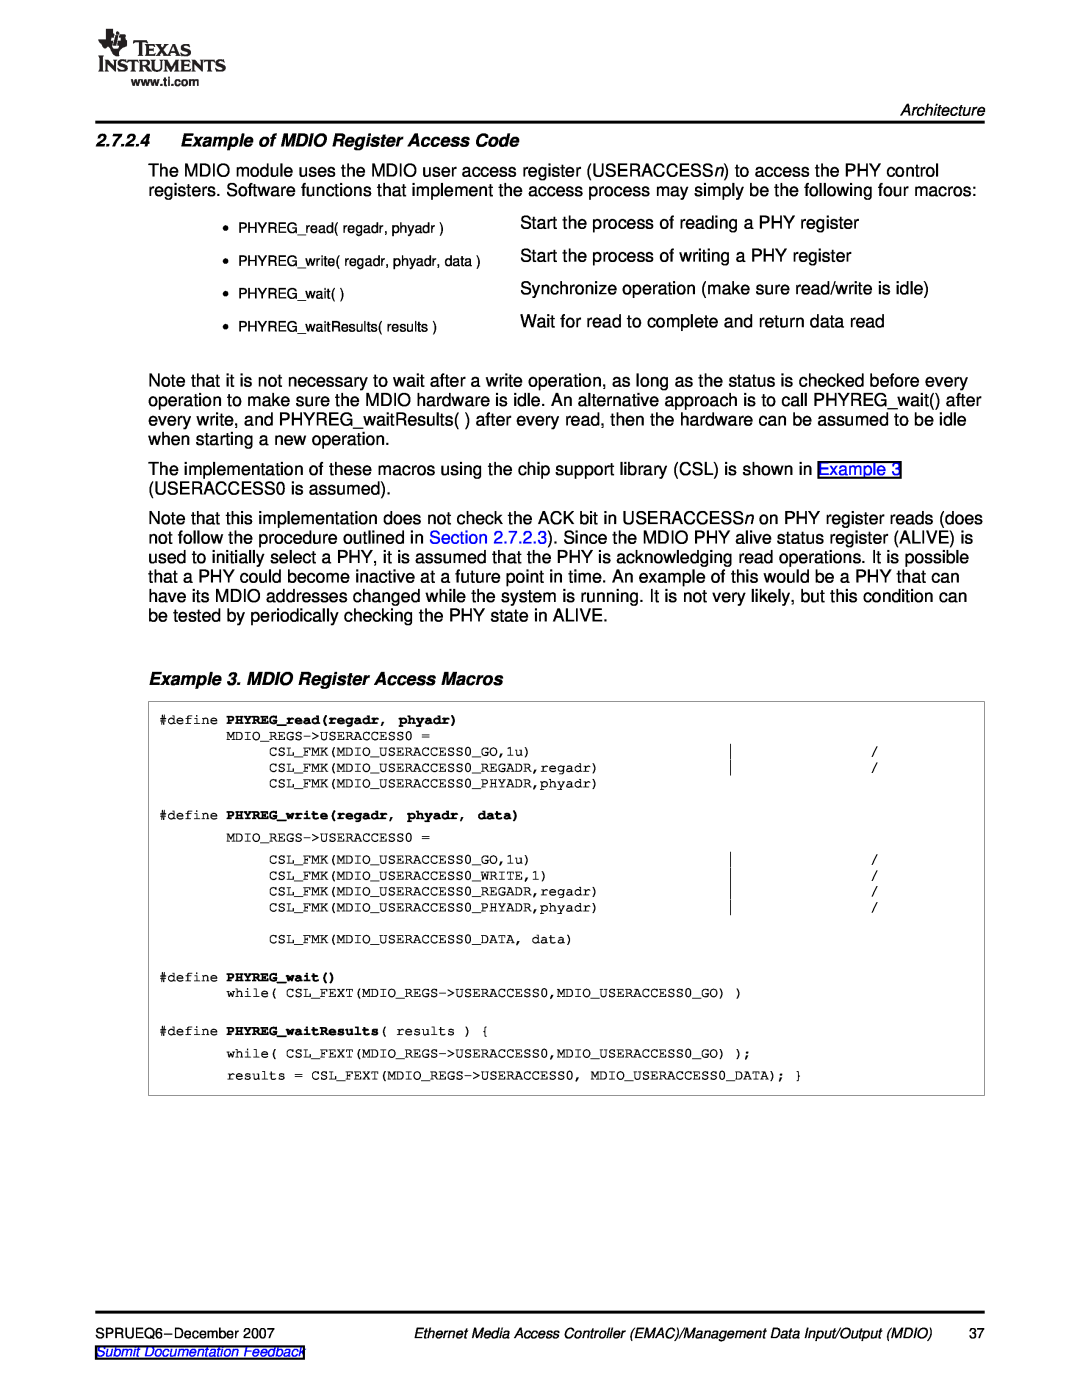 Texas Instruments TMS320DM646x manual Example of MDIO Register Access Code, Example 3. MDIO Register Access Macros 